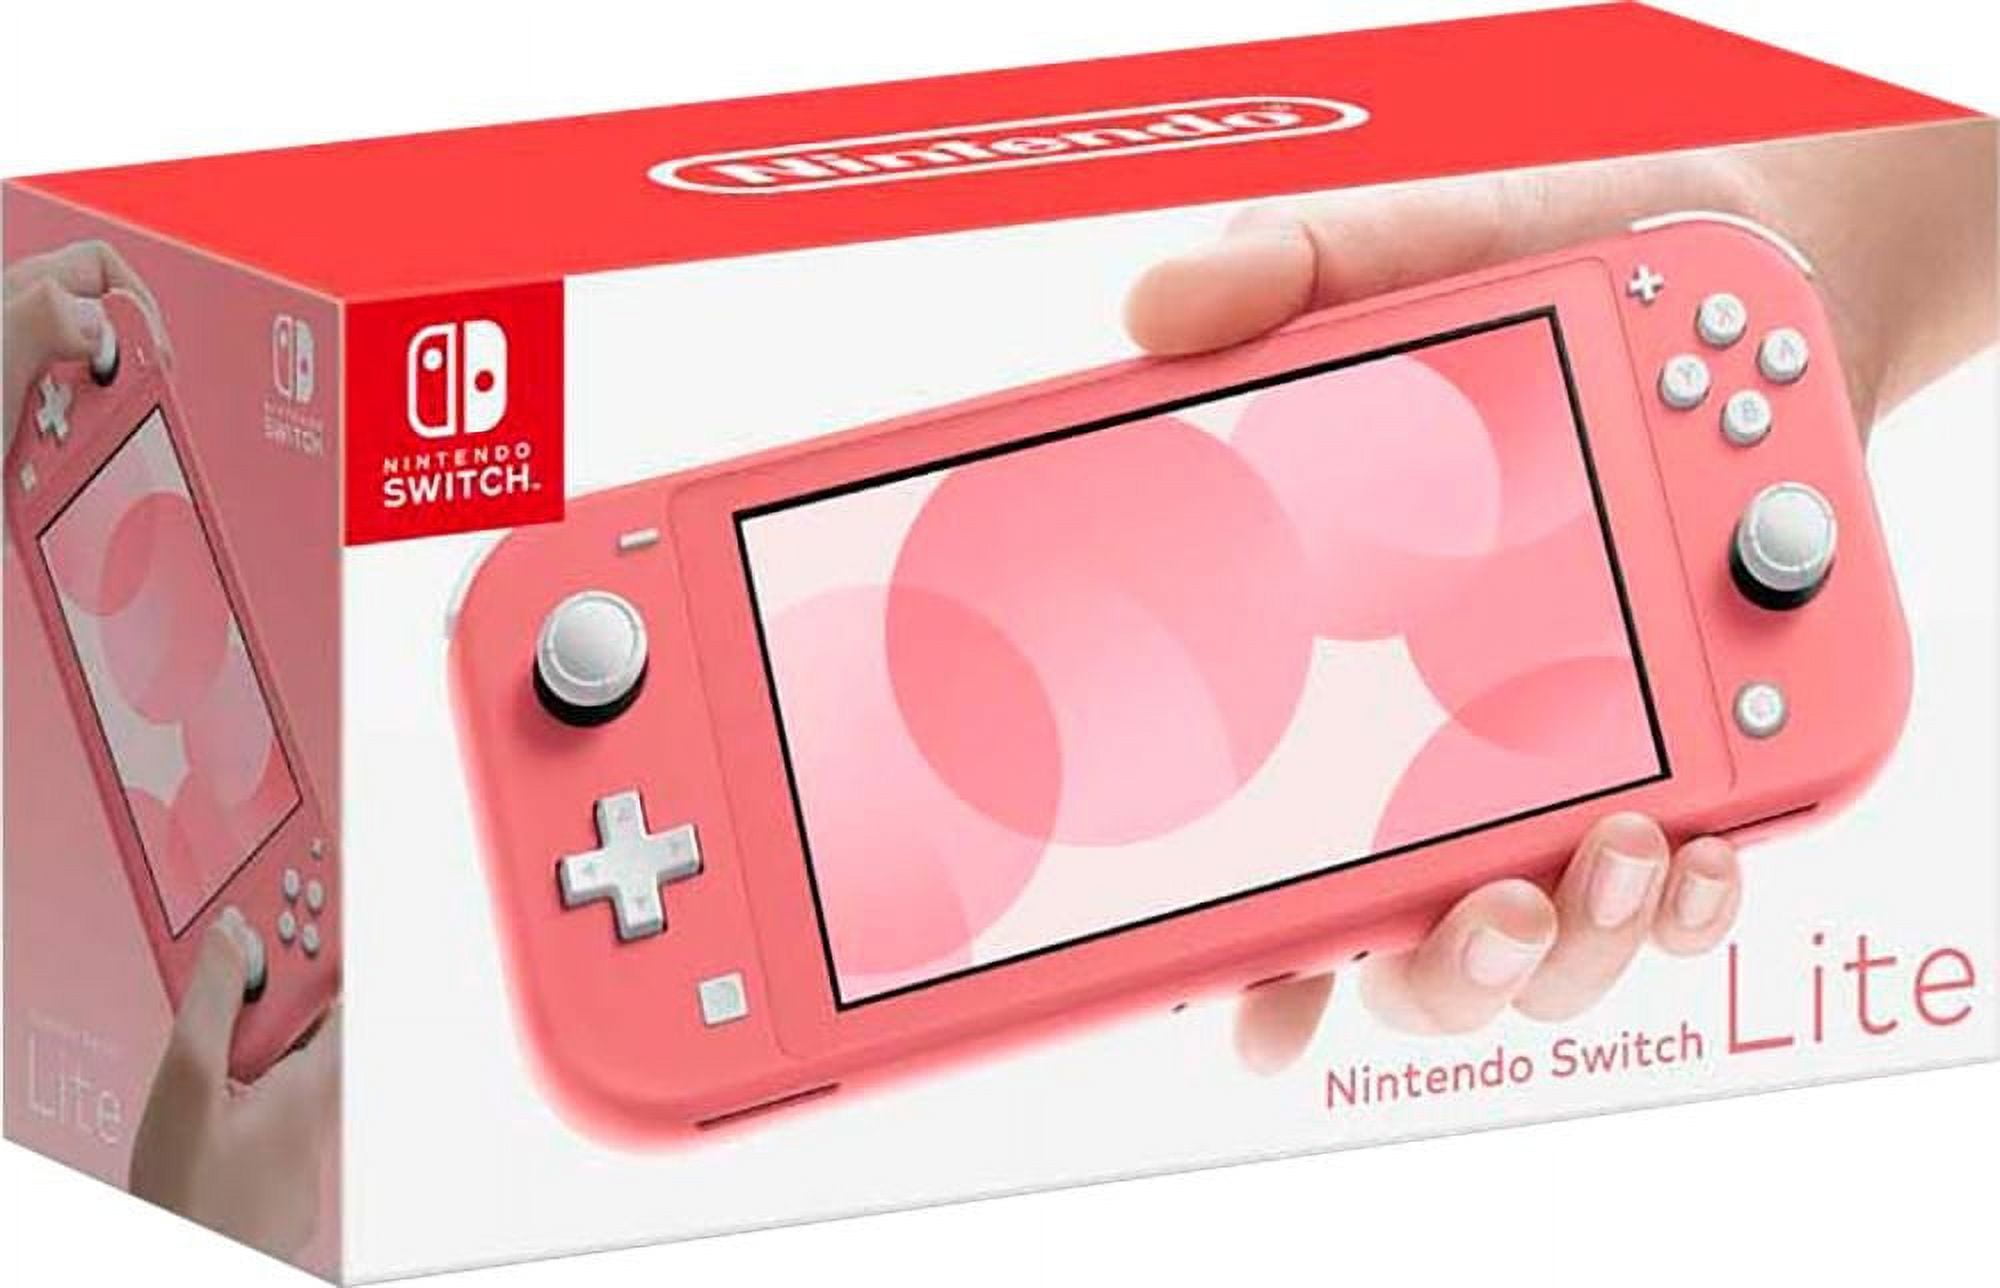 Nintendo Switch Lite (Turquoise) Bundle Includes Animal Crossing: New  Horizons 